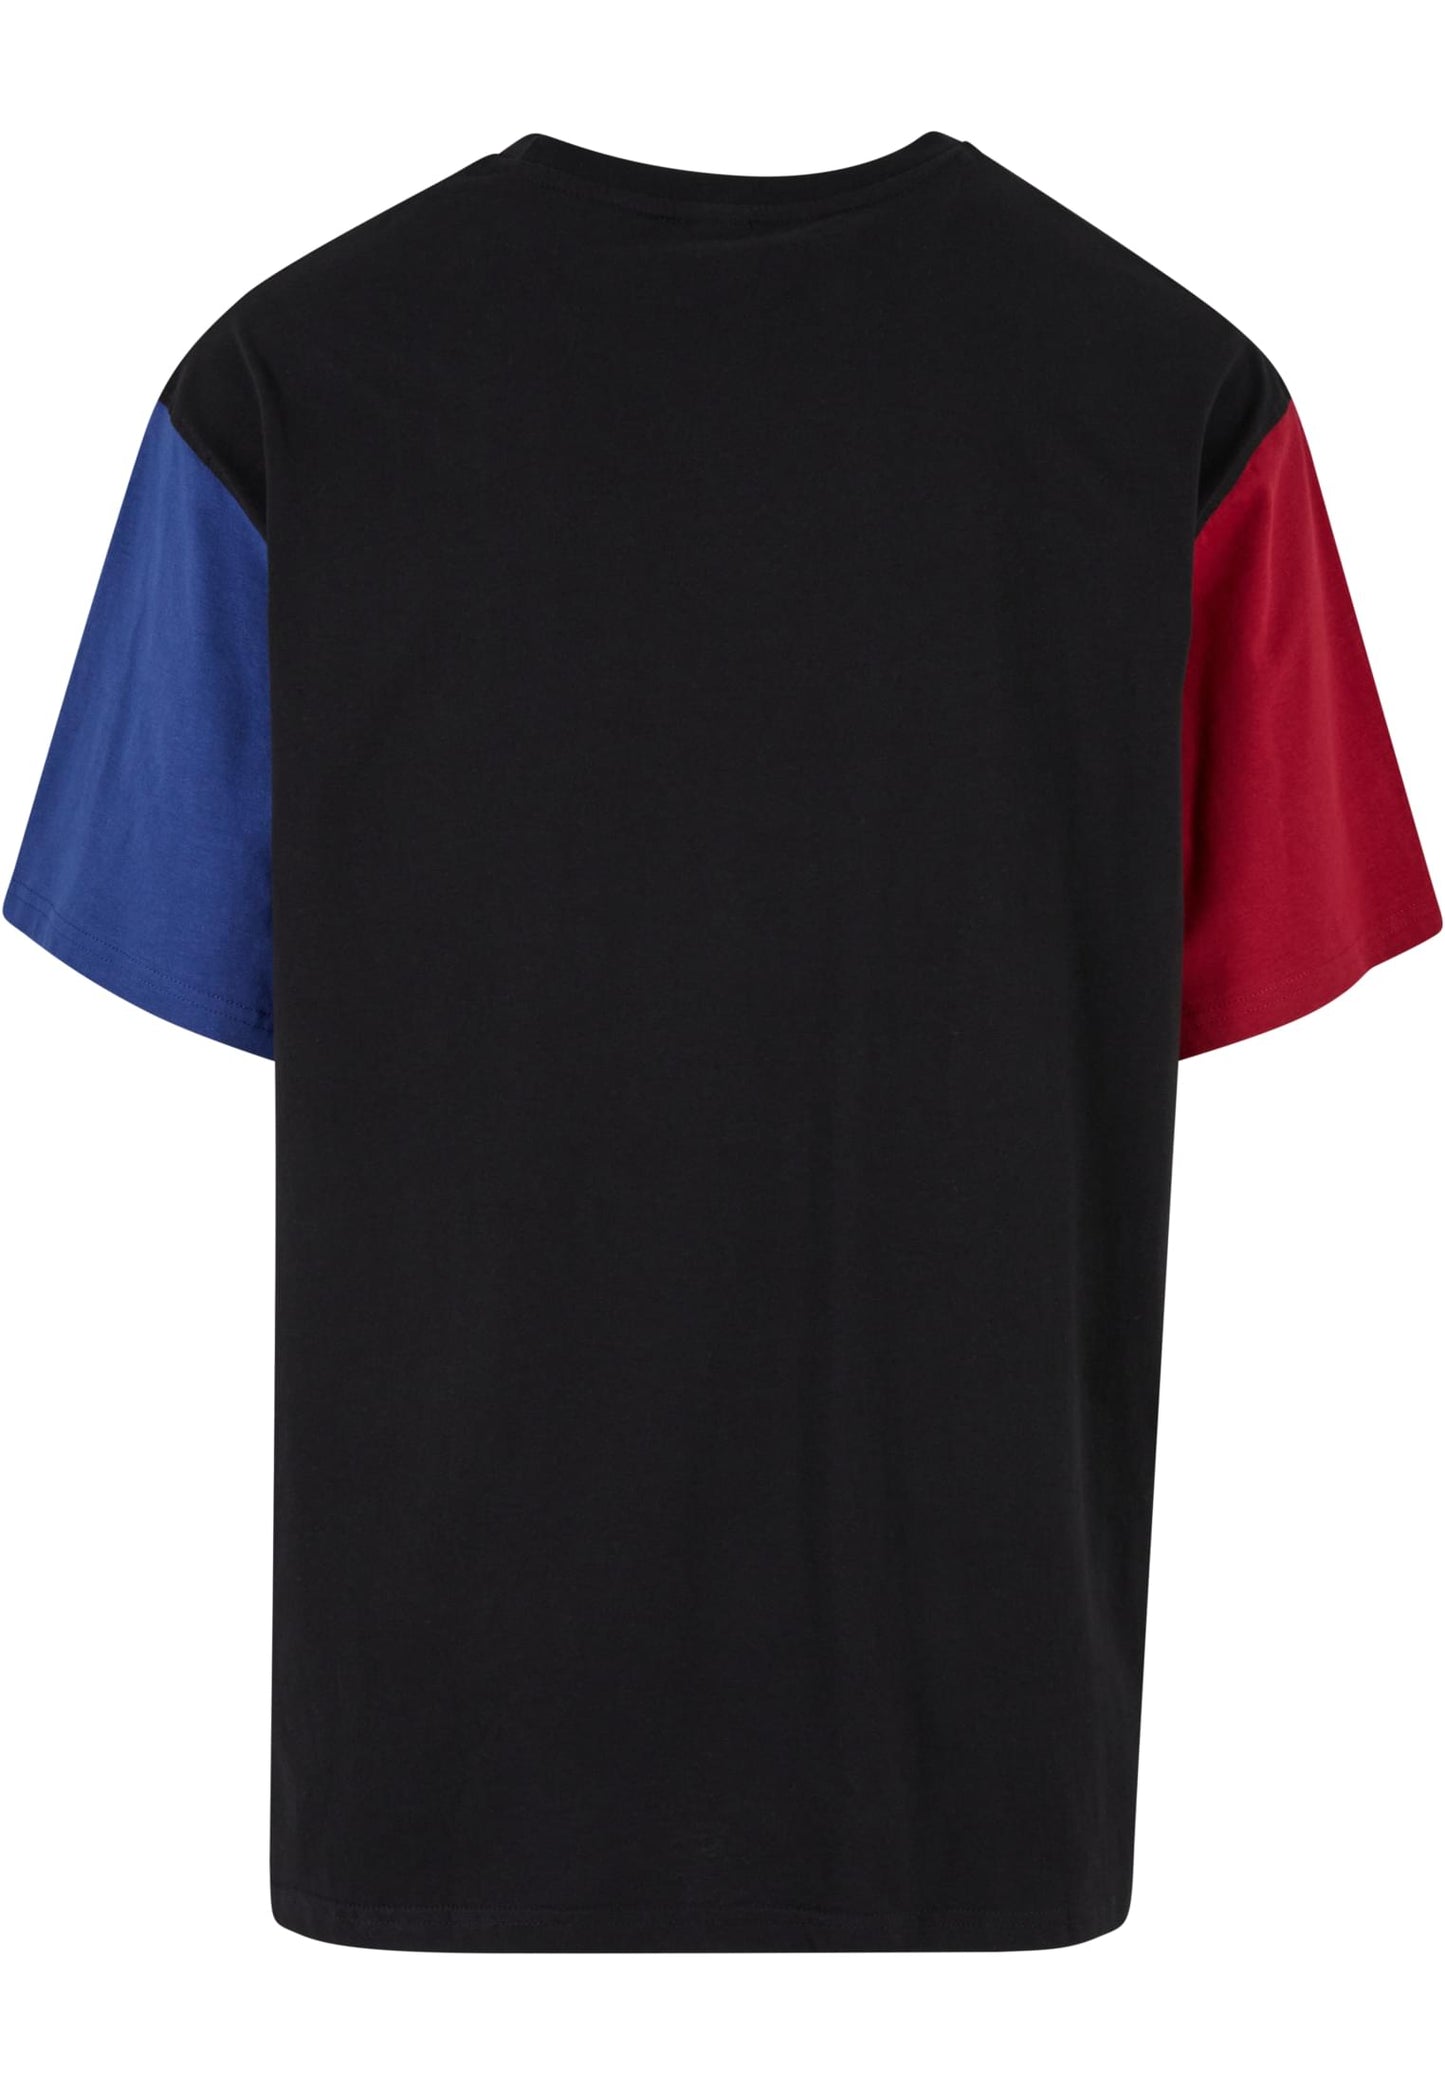 Ecko Unltd. Grande T-Shirt black/red/blue